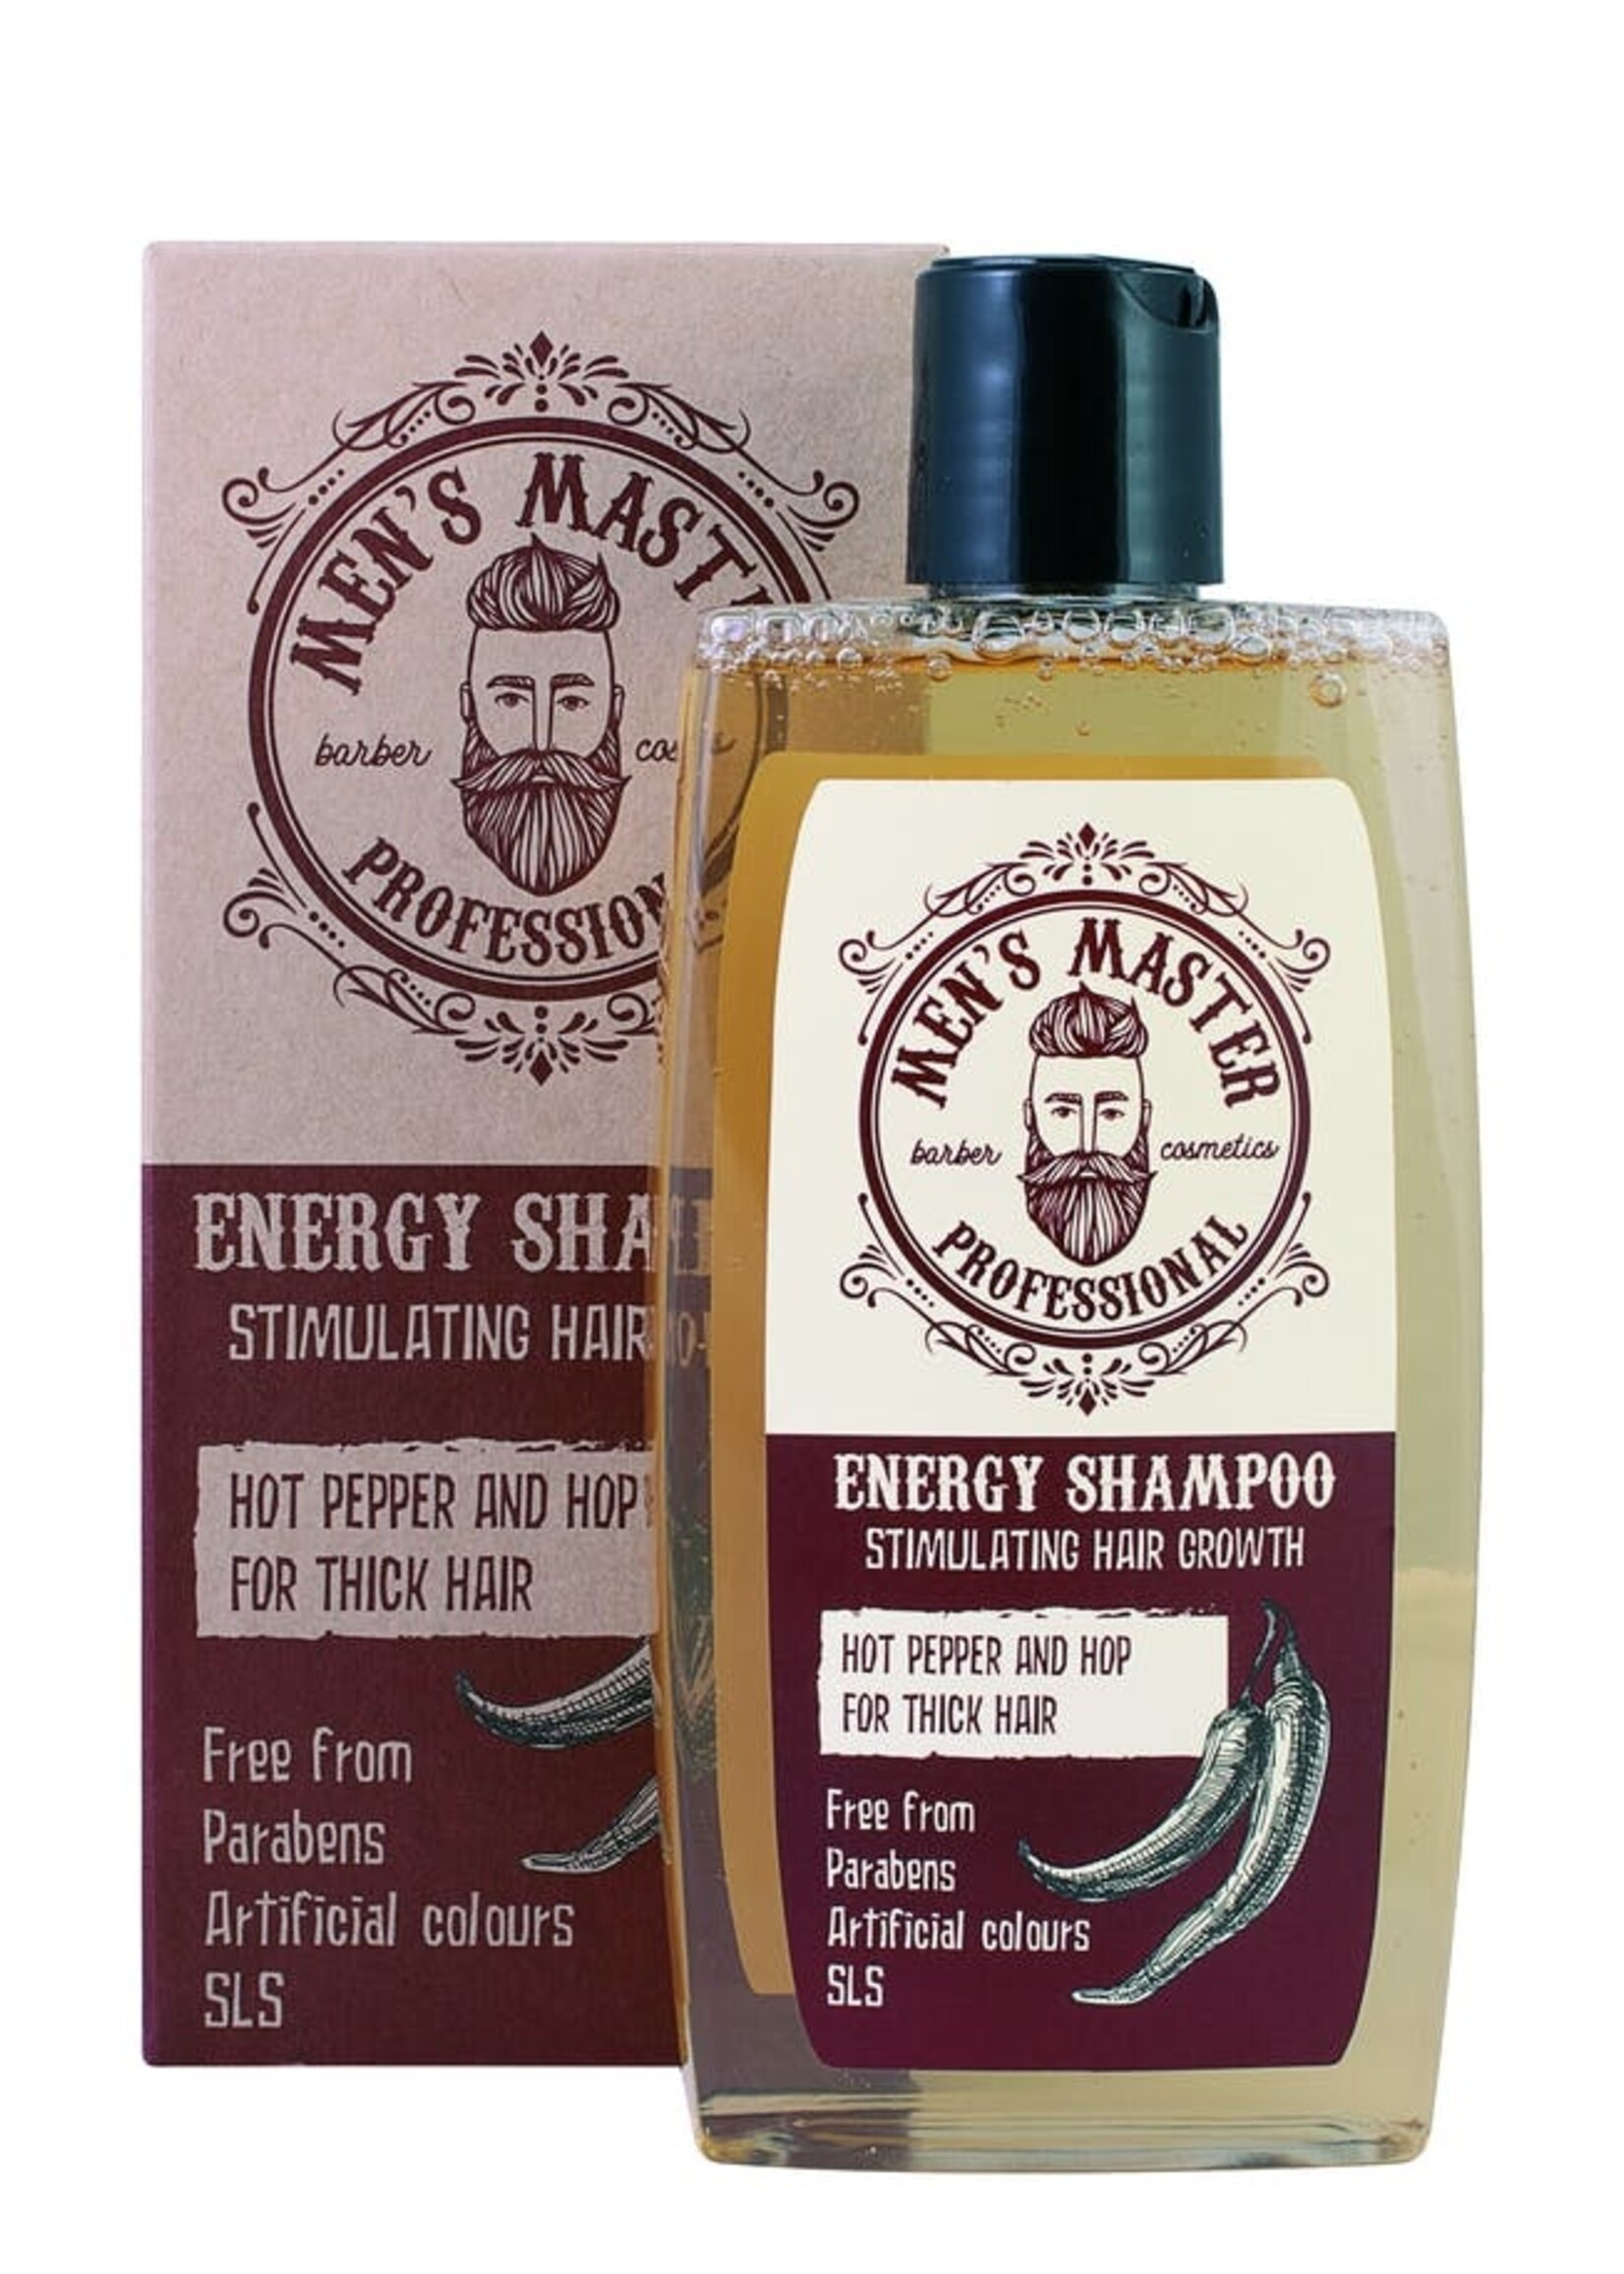 Men's Master Professional  Energy Shampoo